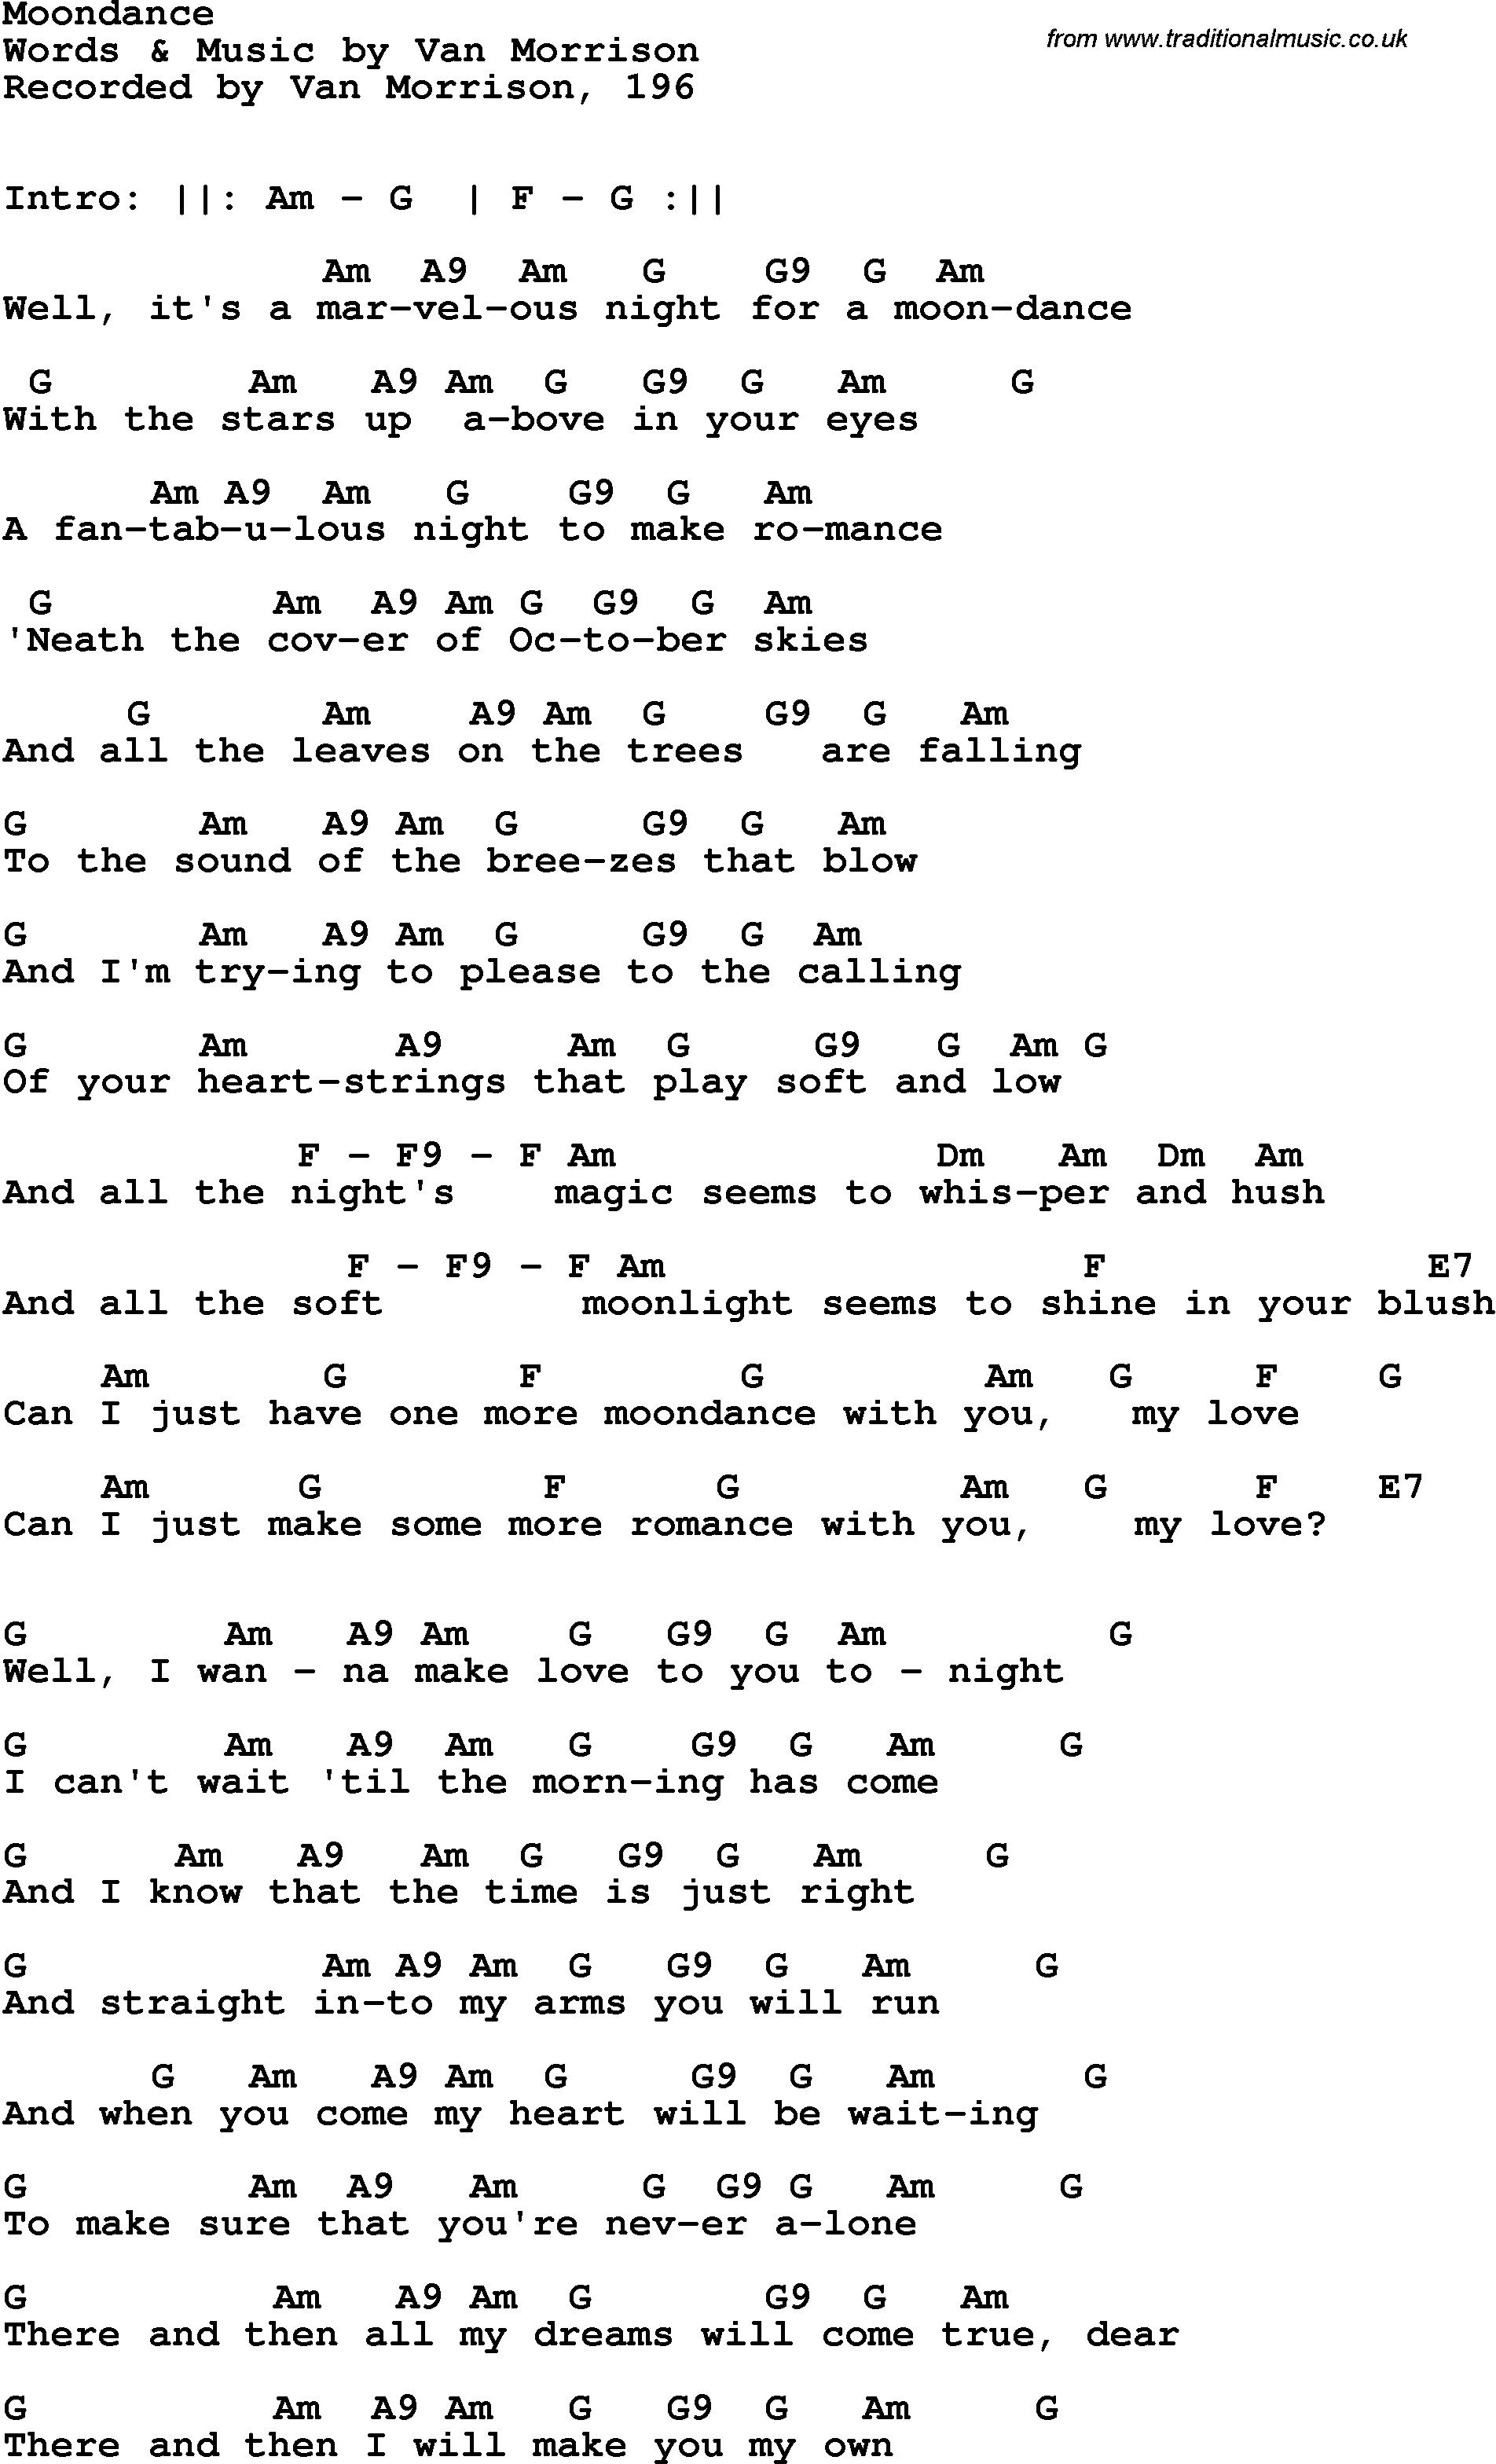 Song Lyrics with guitar chords for Moondance - Van Morrison, 1969